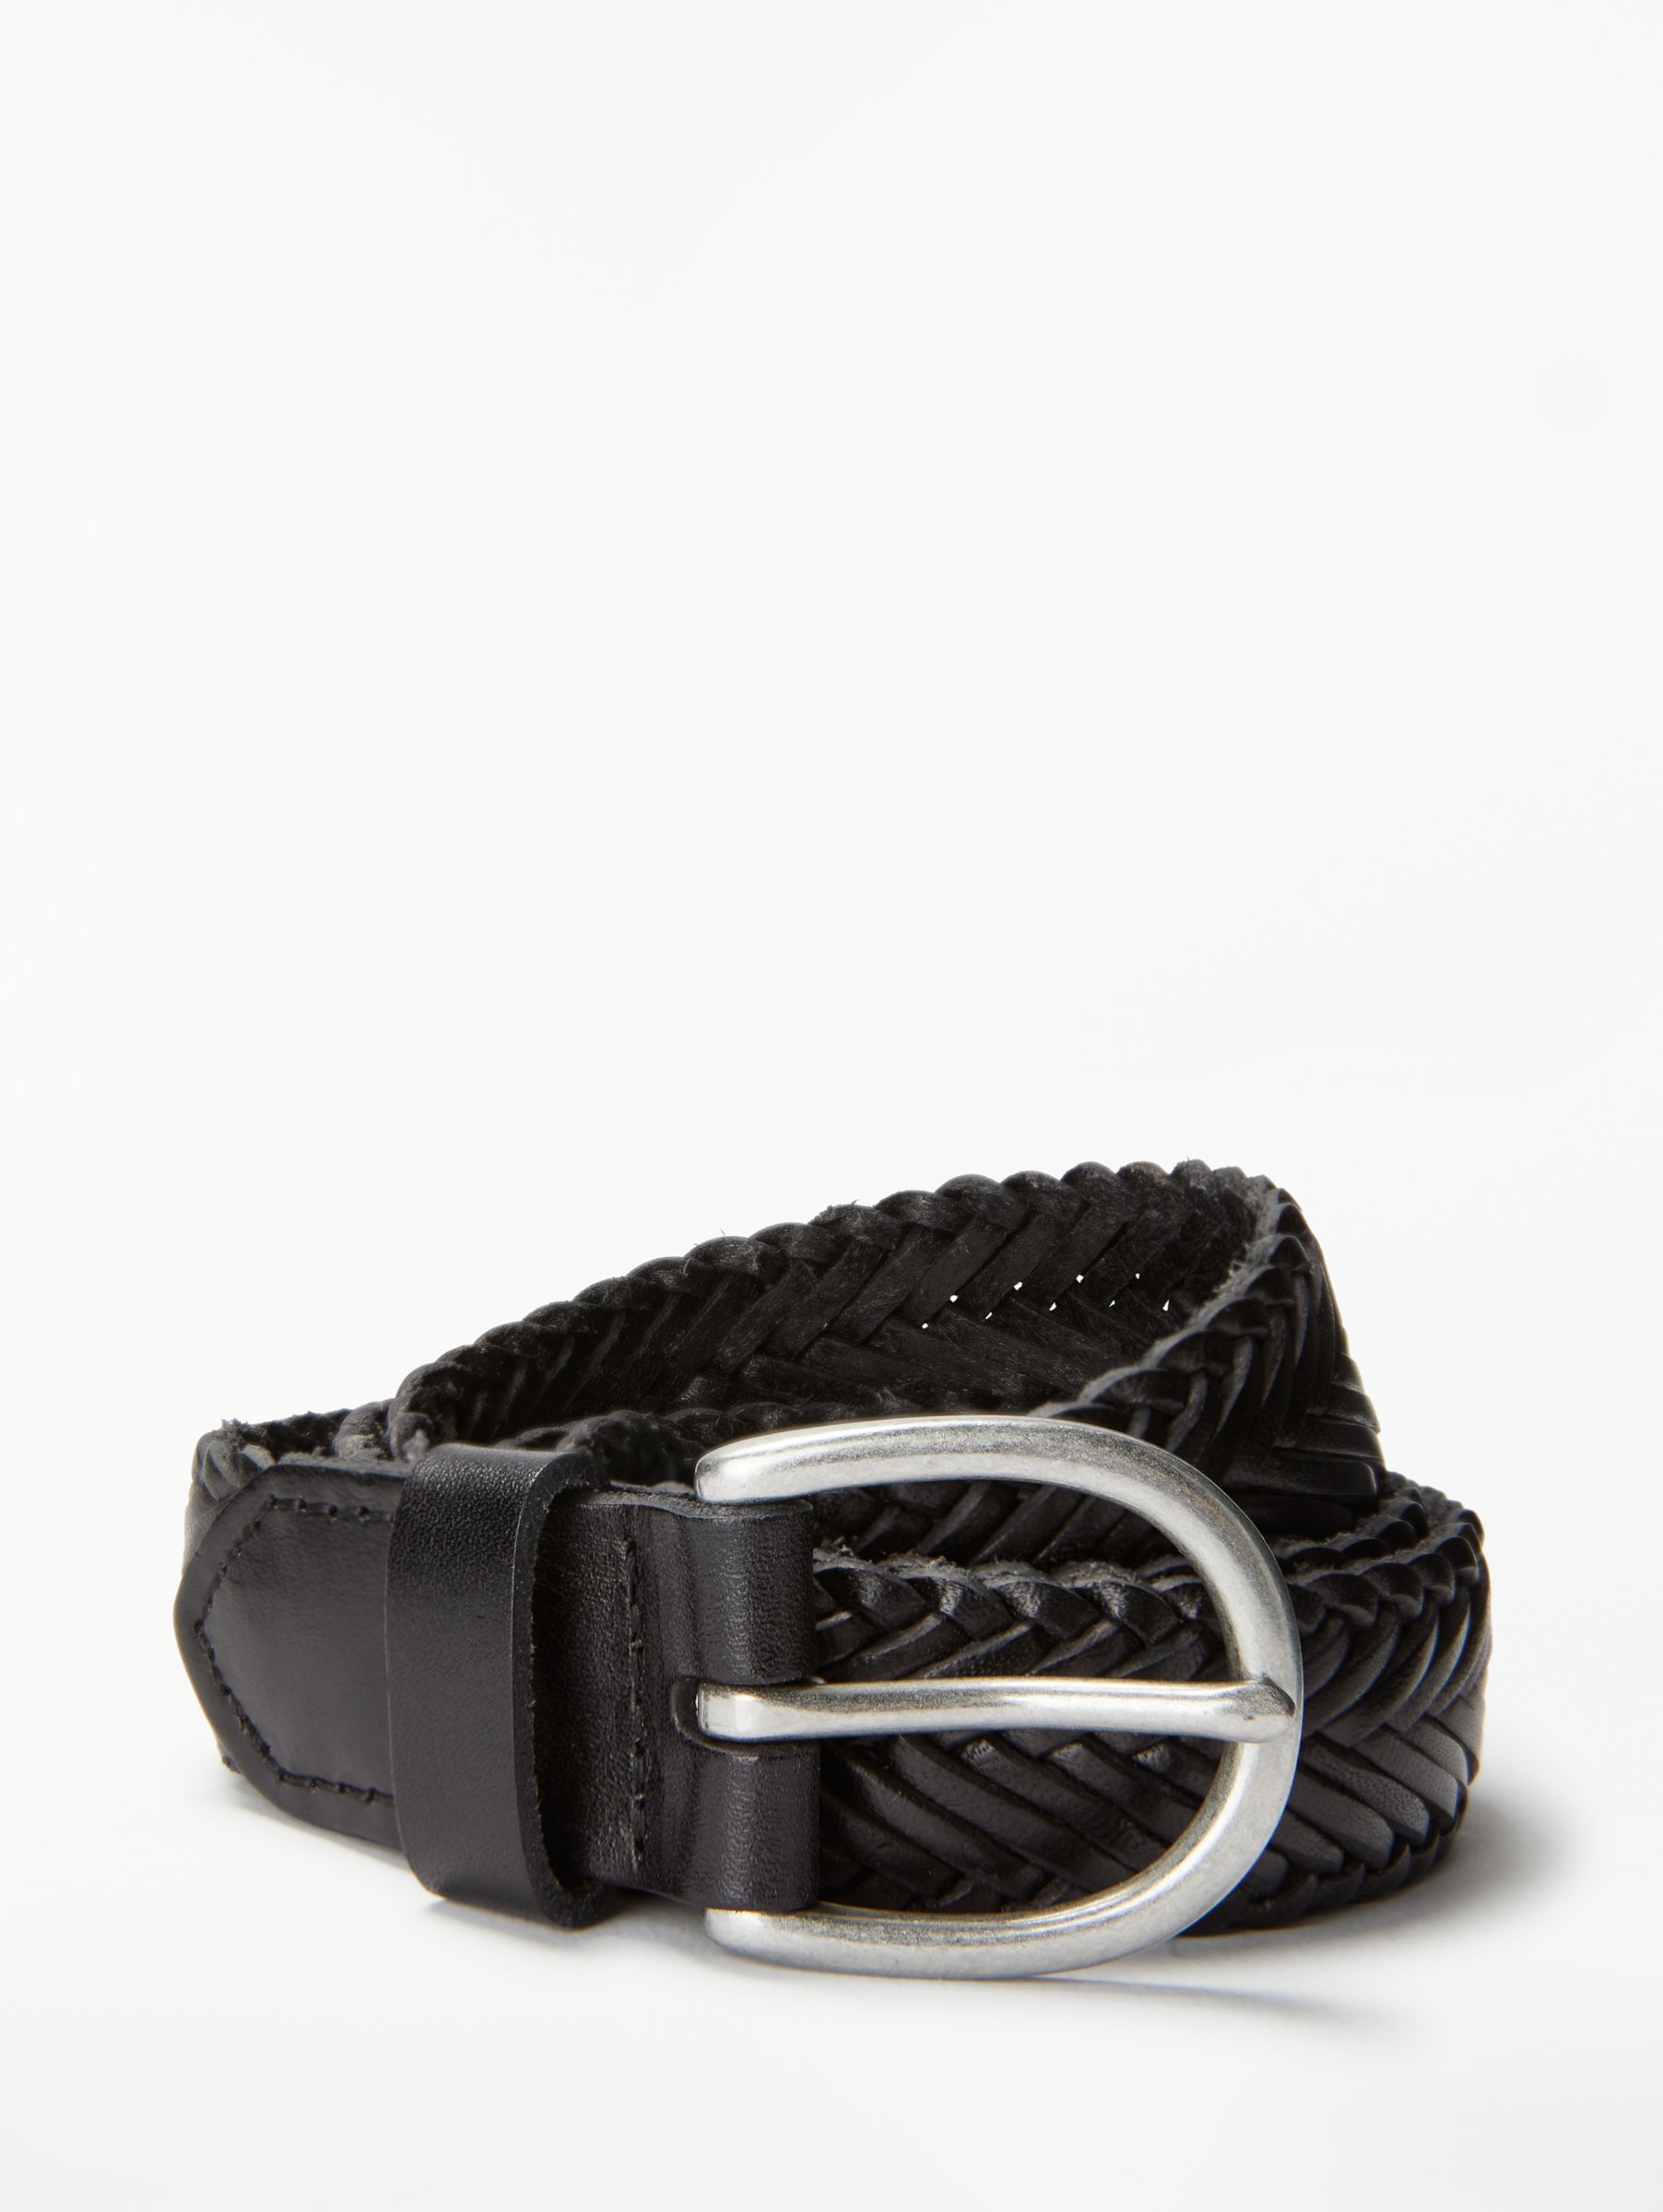 John Lewis Sianne Skinny Plaited Leather Belt, Black, S